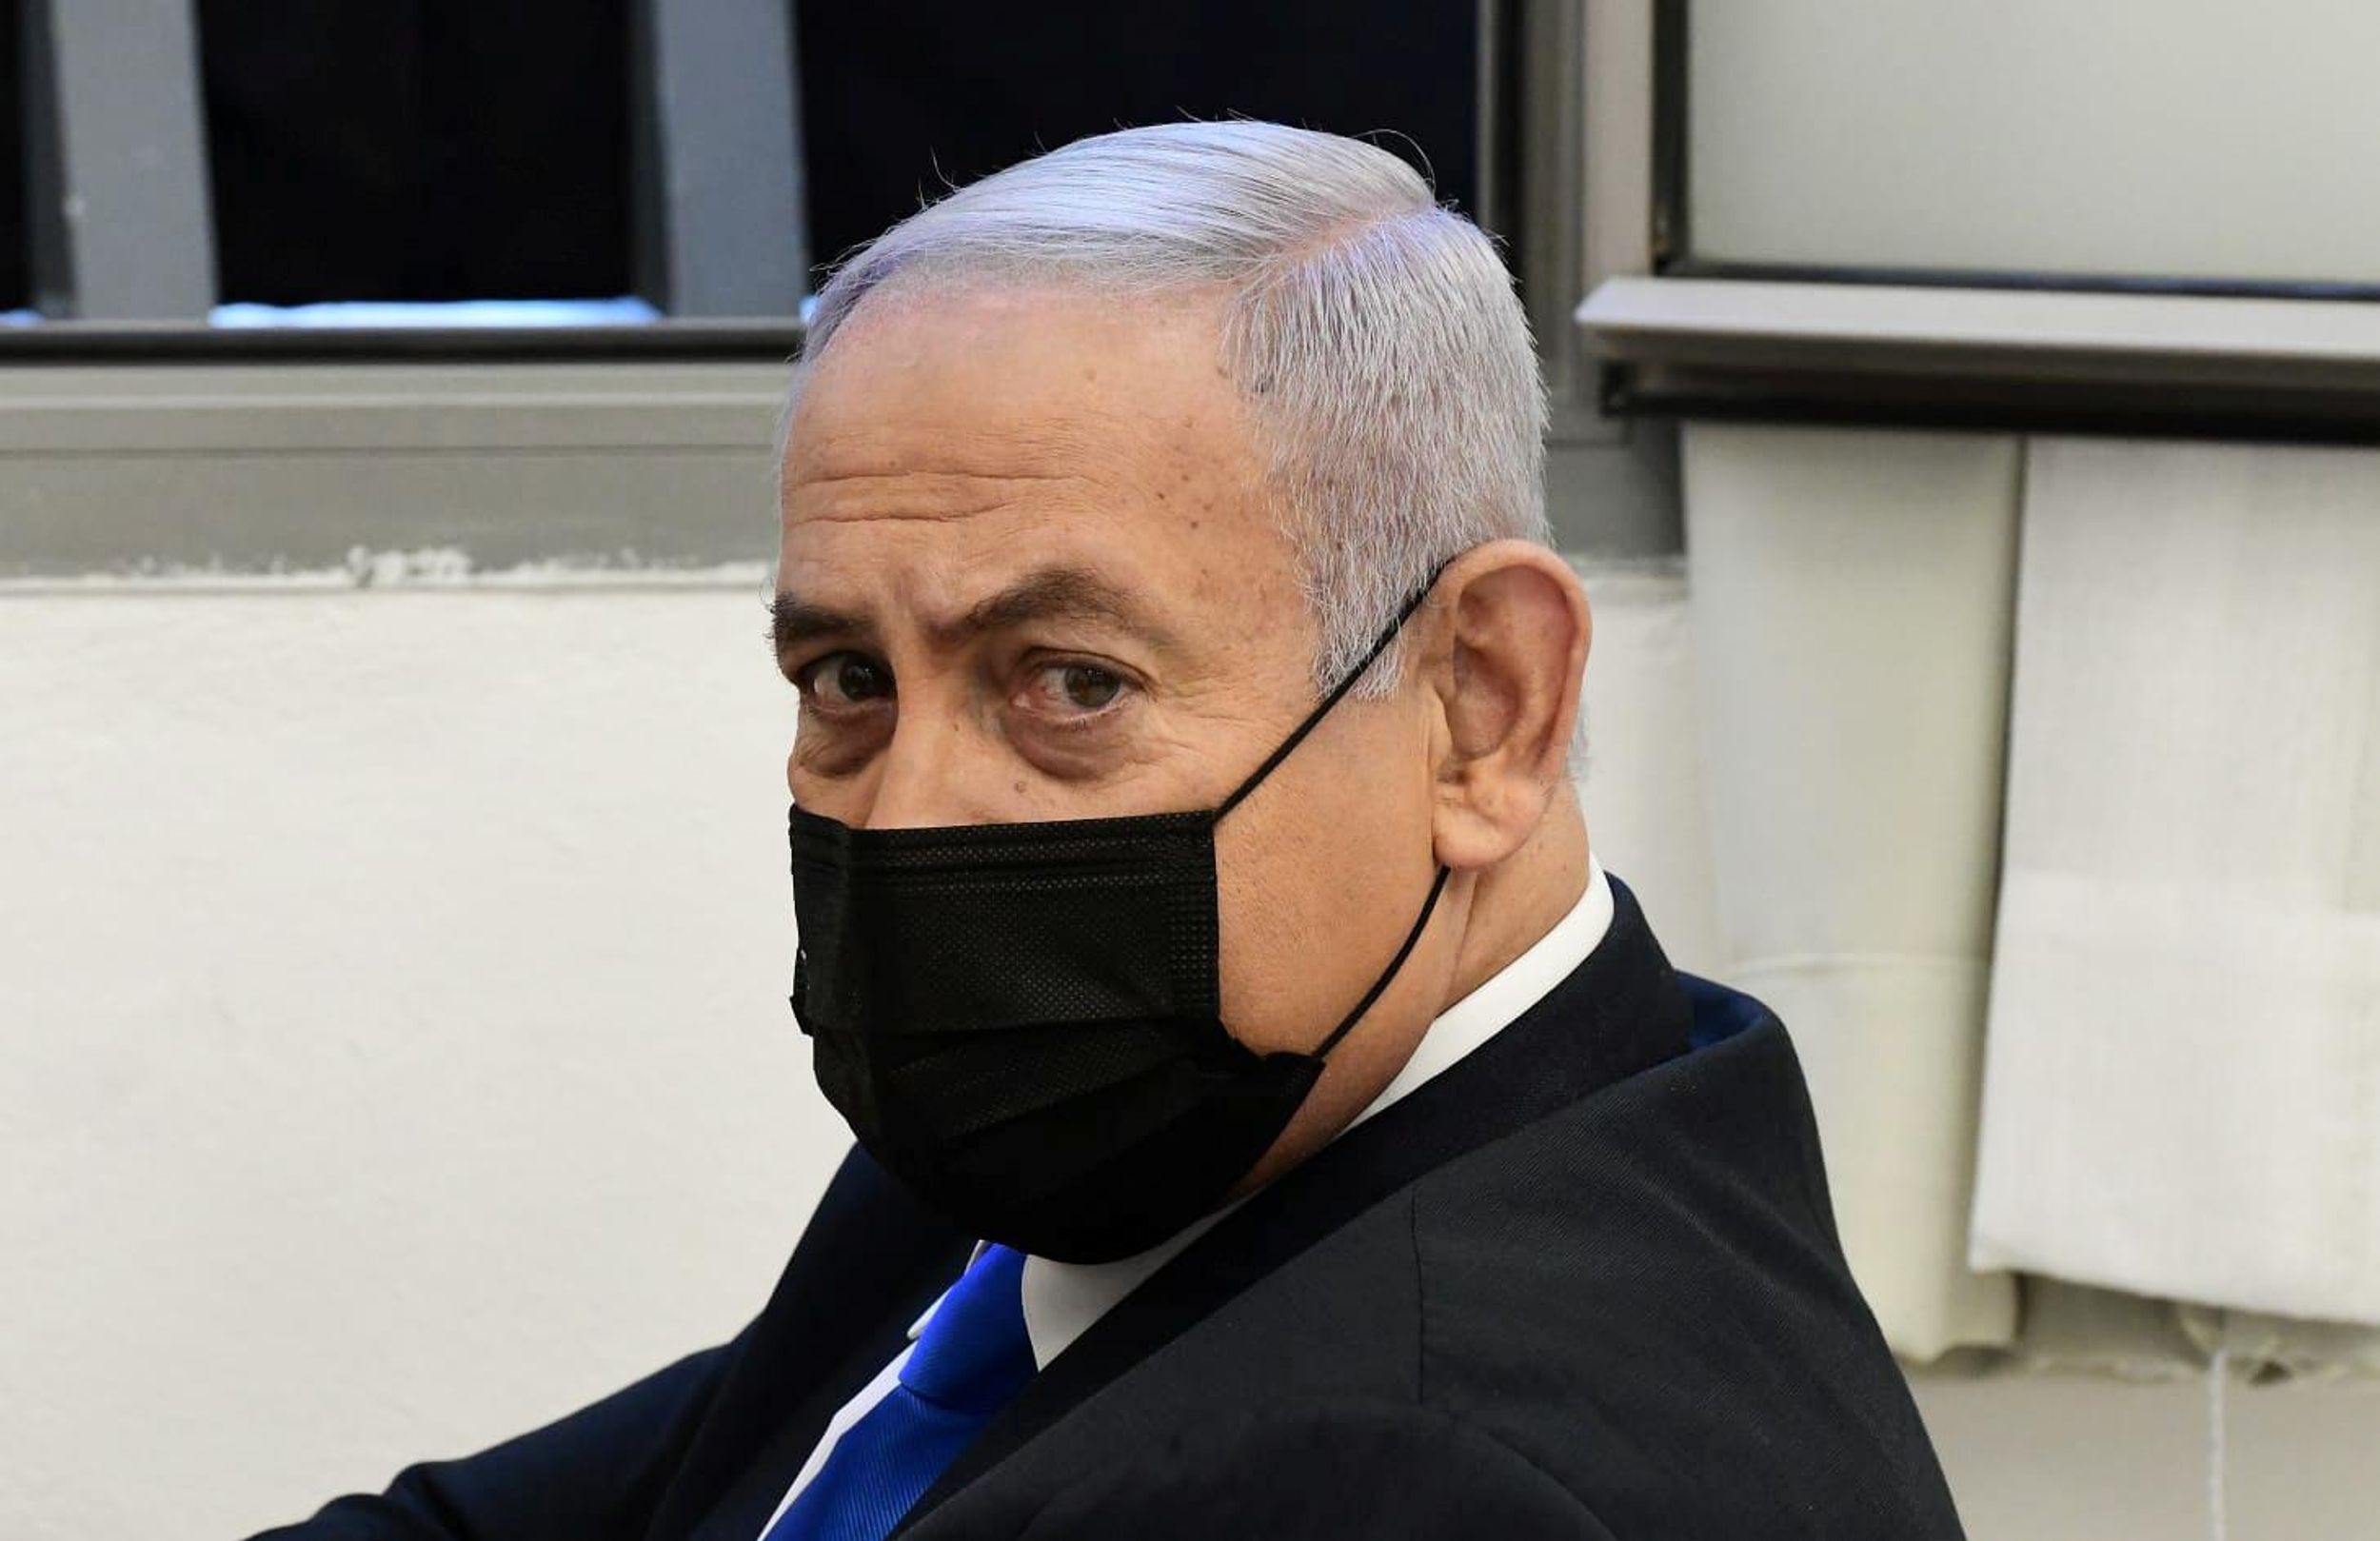 Israel's Prime Minister Benjamin Netanyahu in court 